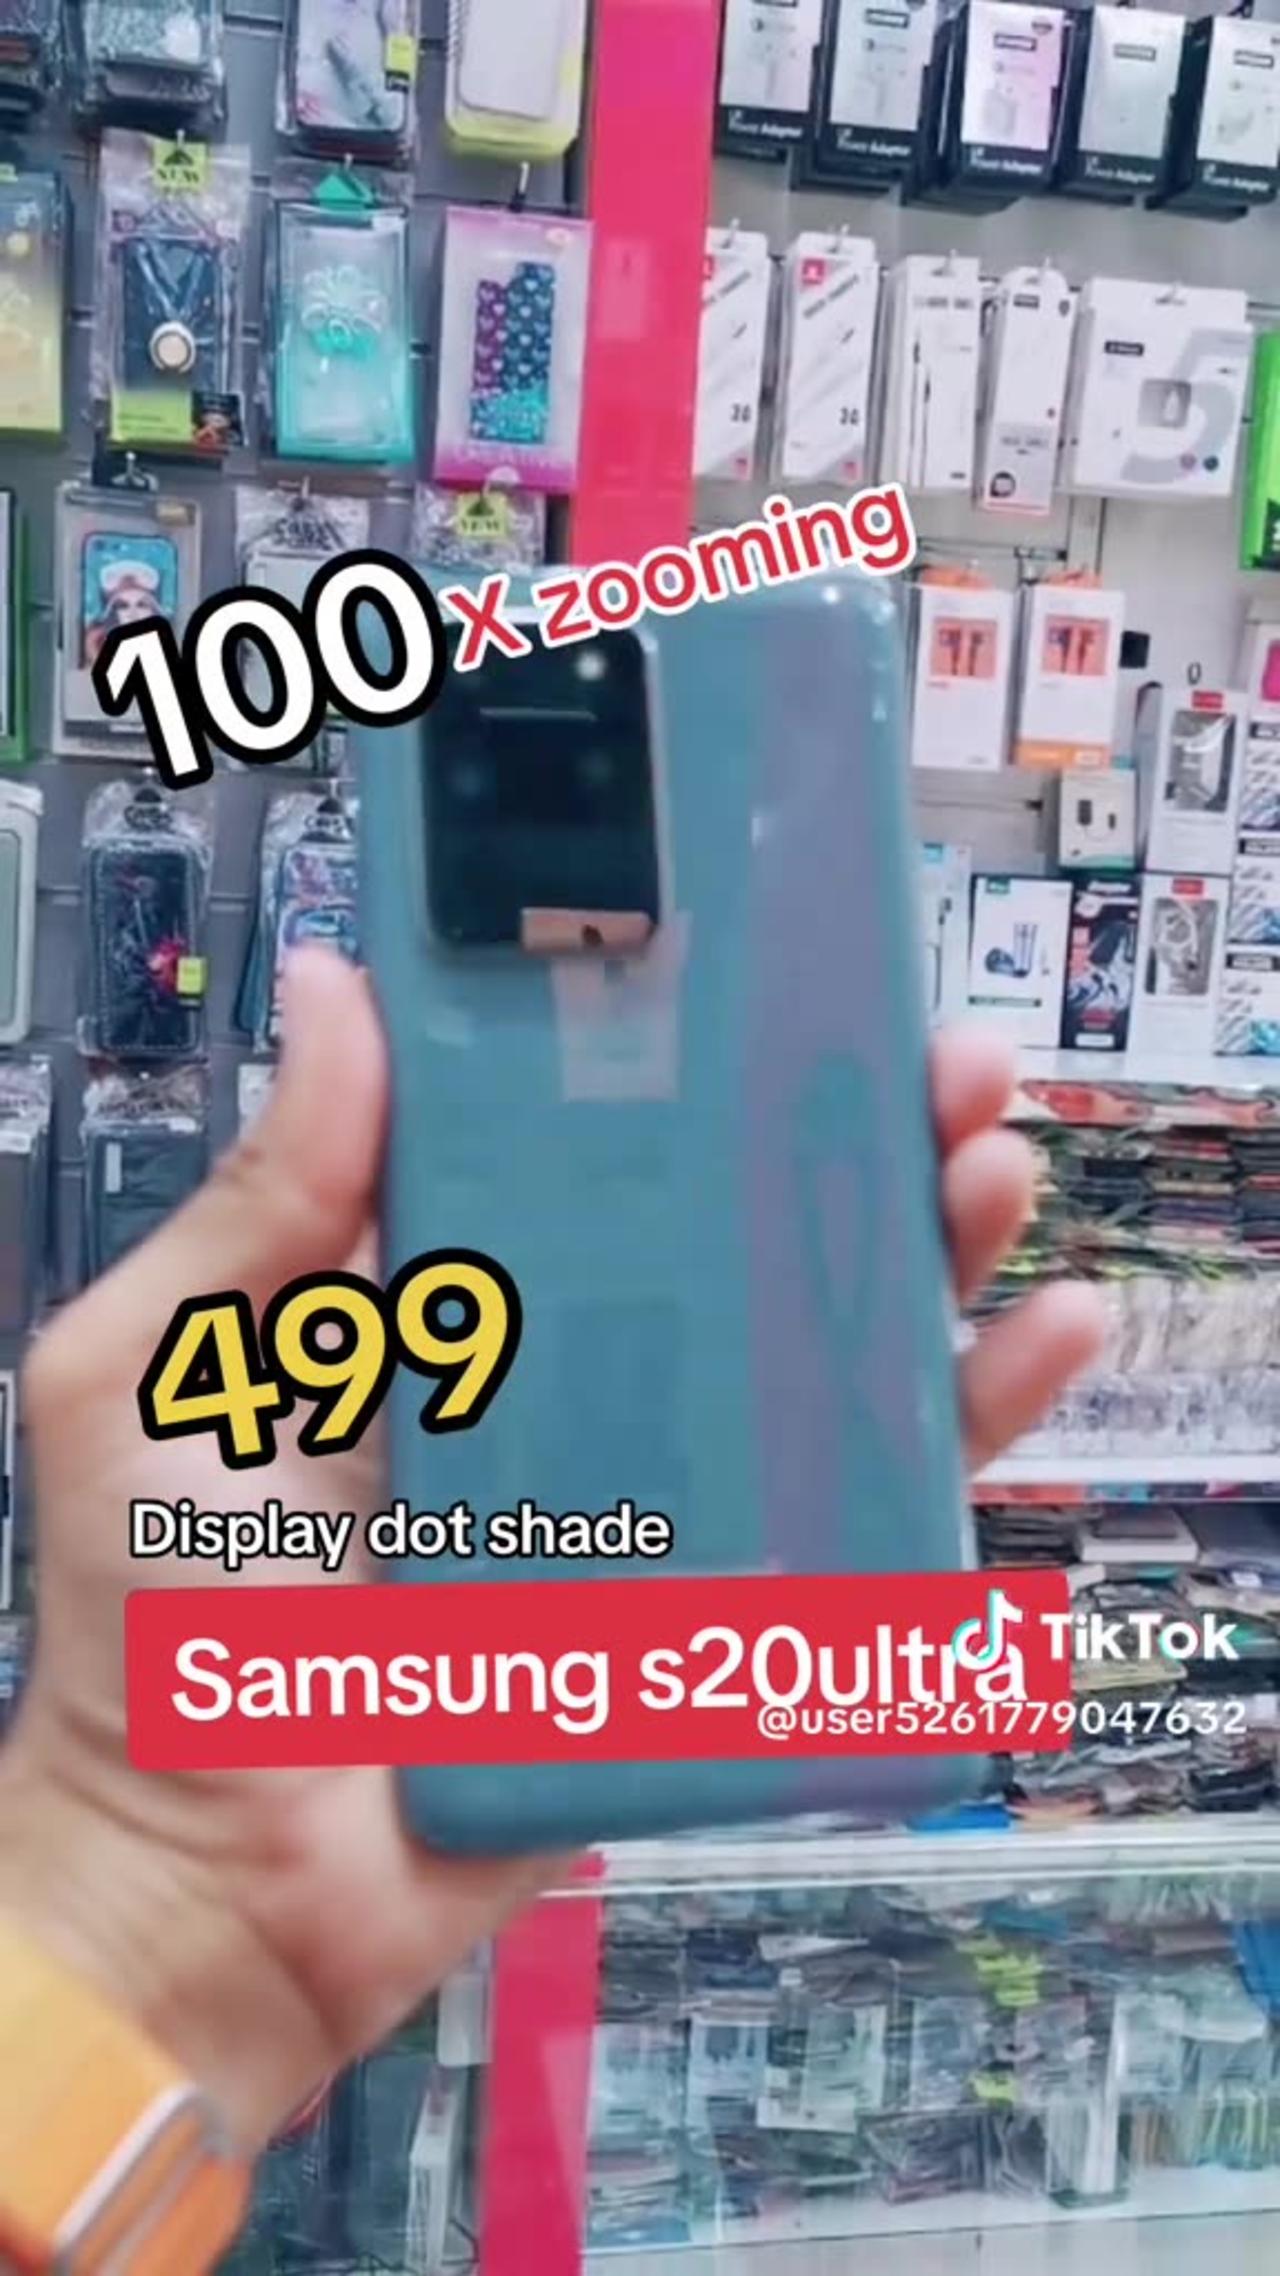 Samsung S20 Ulta very cheap price Dubai please follow and like